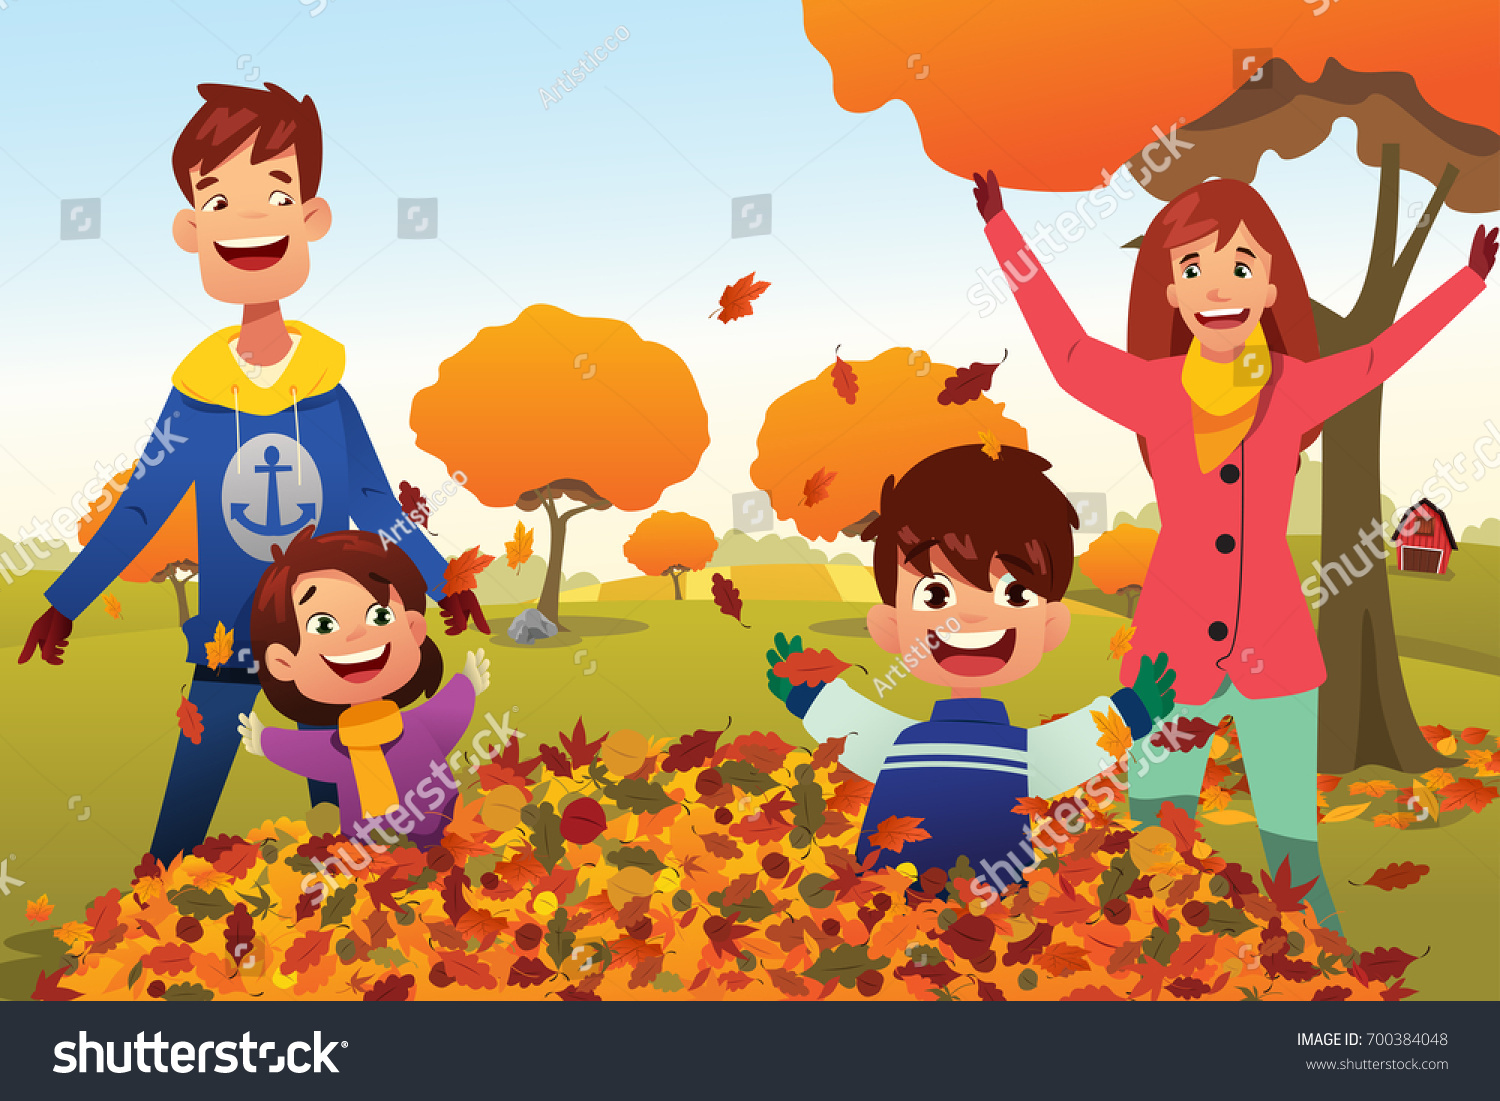 Autumn Season For Kids / Fall Songs For Kids In Autumn Preschool